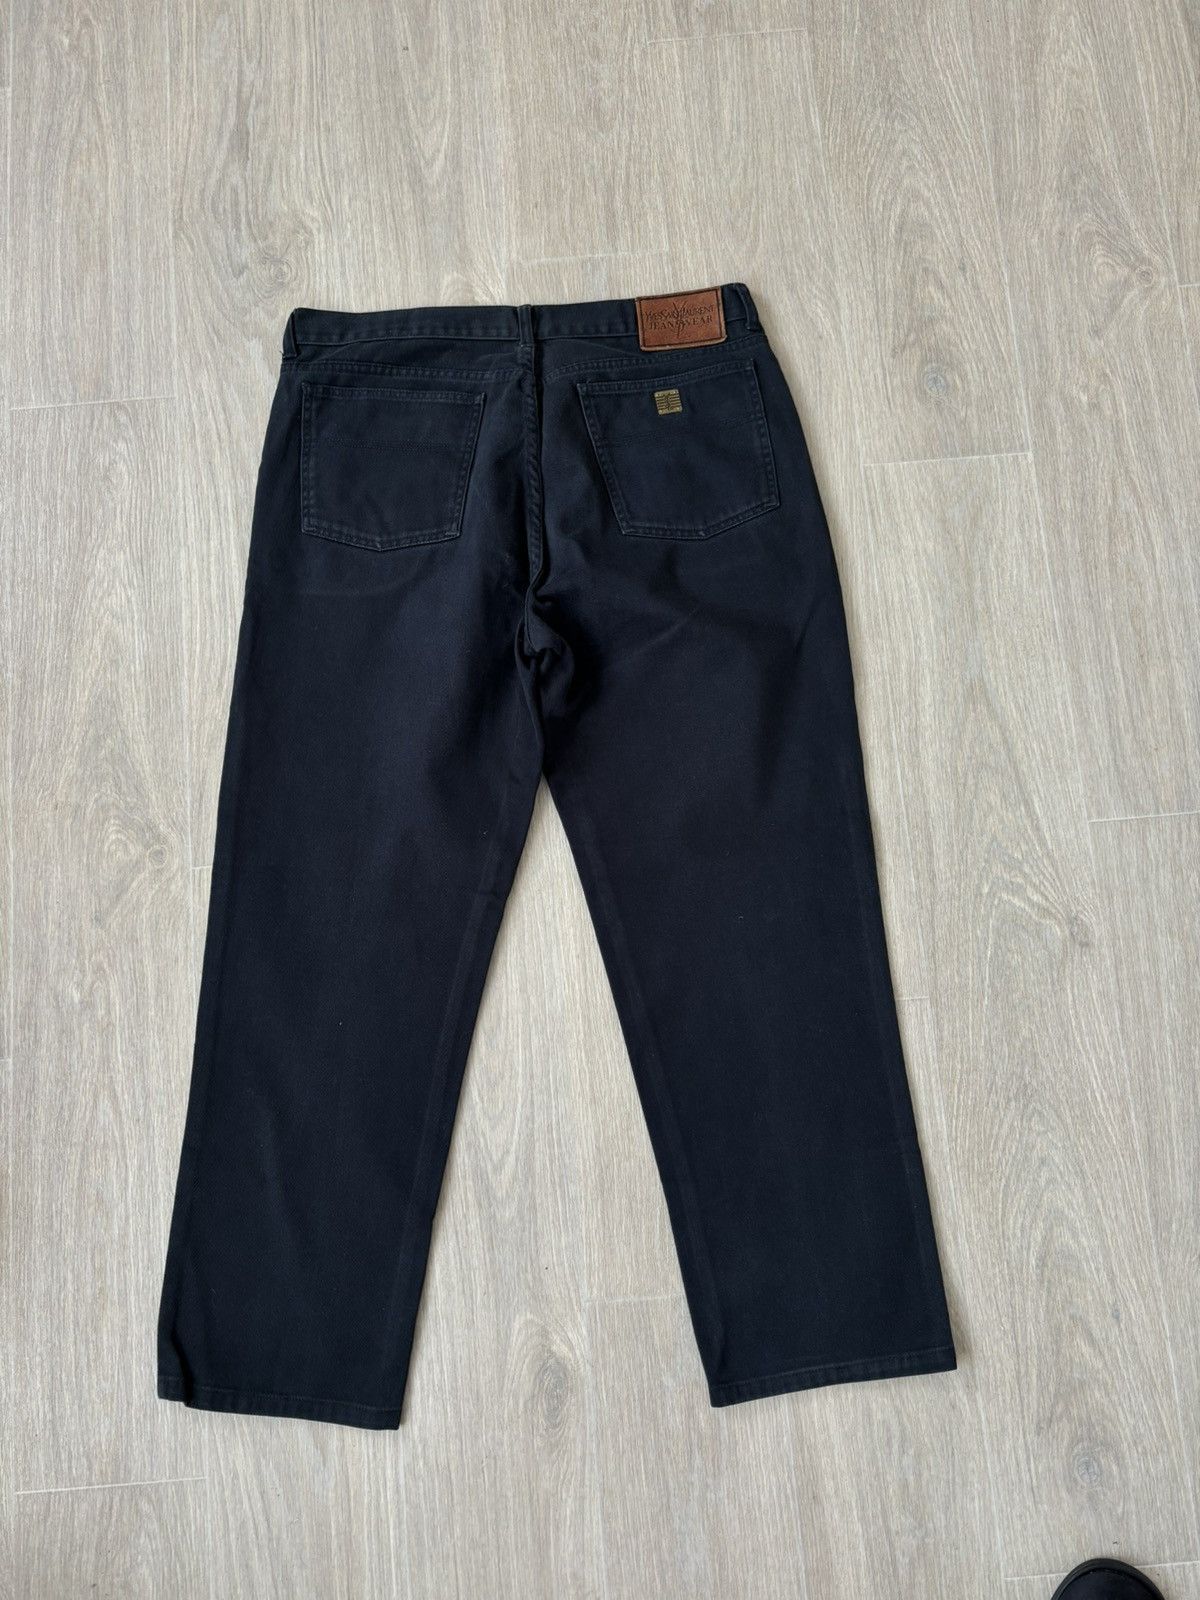 Vintage Vintage YSL jeans 90s rare Size US 36 / EU 52 - 3 Thumbnail